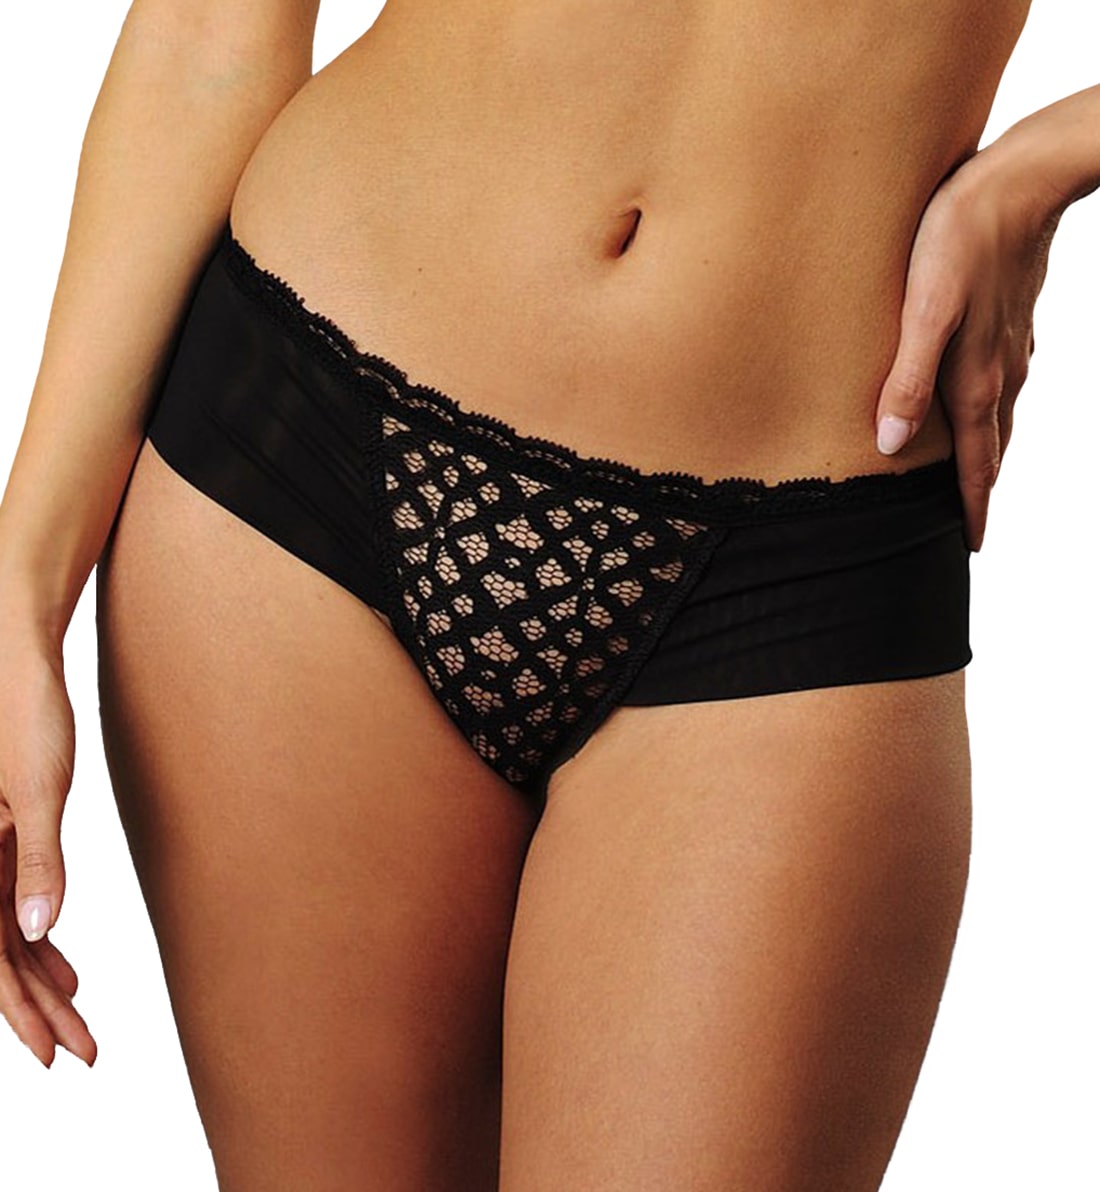 Comexim Tara Matching Brazilian Brief Panty (CMTARAMB),Small,Black - Black,Small